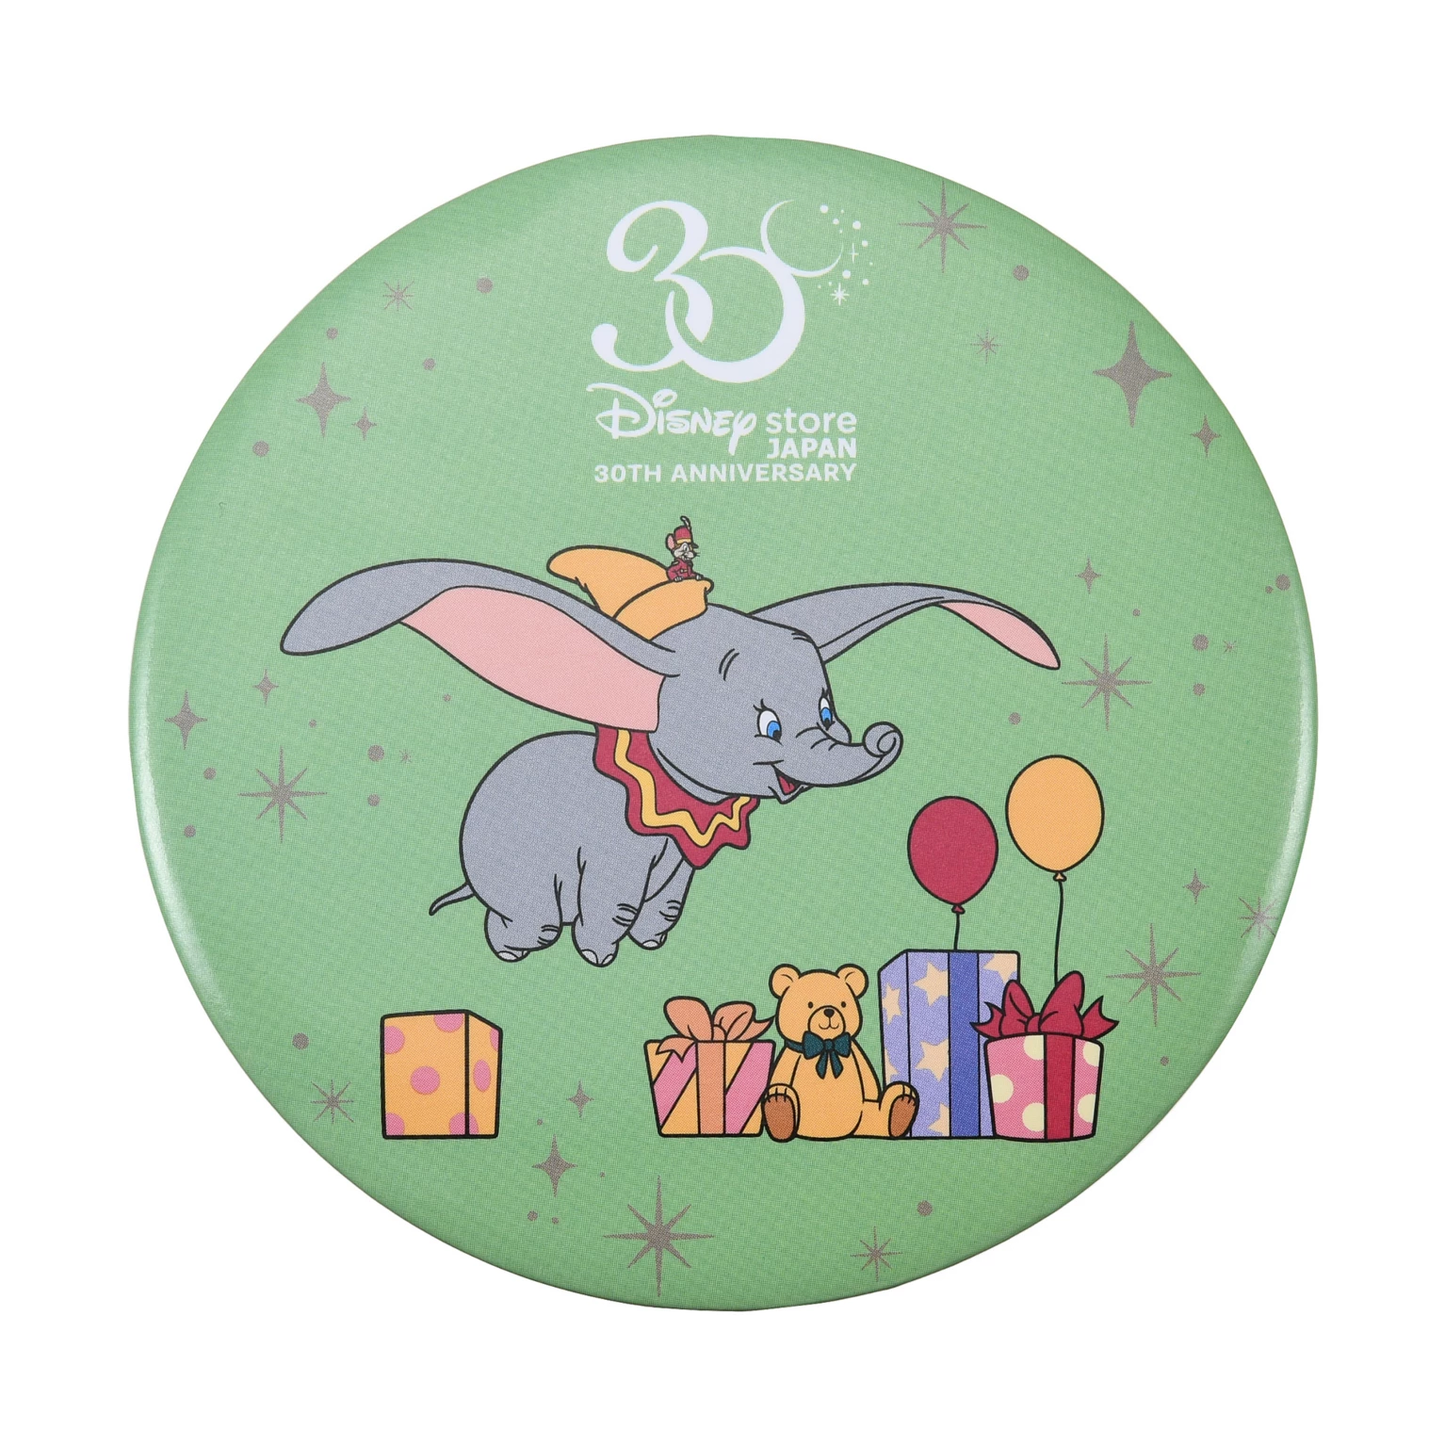 SDJ - Disney Store Japan 30TH Anniversary - Button